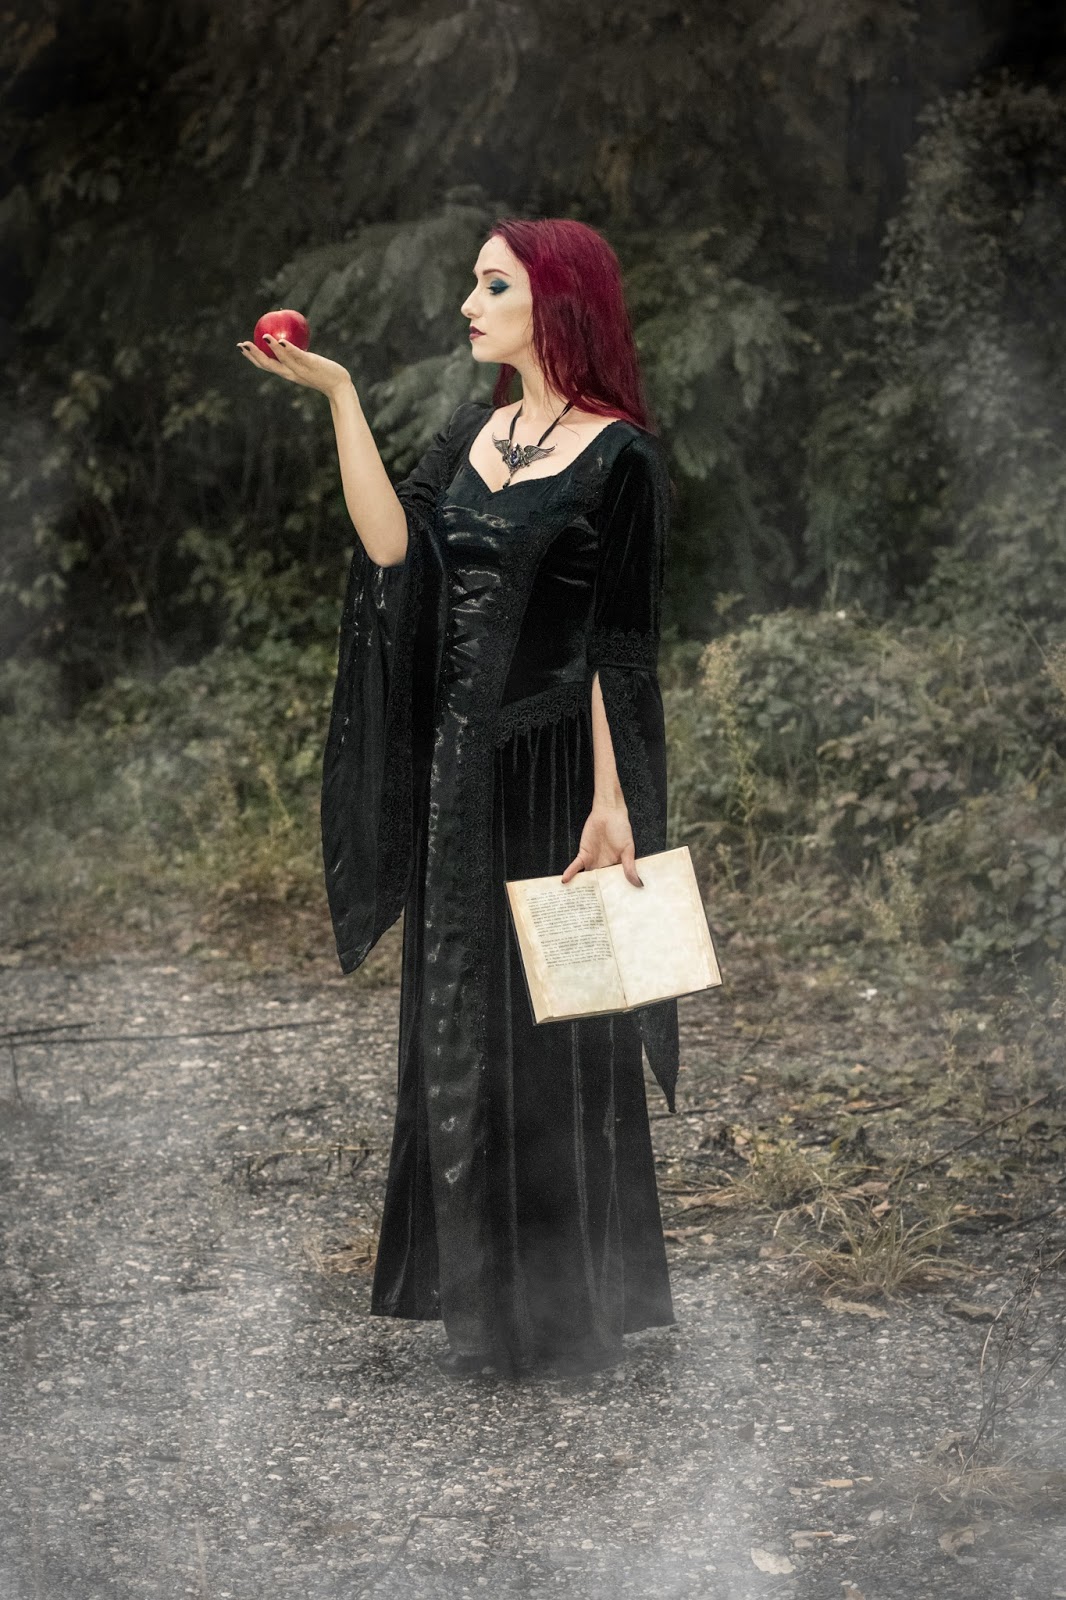 Attic of Mrs. V: The Medieval Sorceress